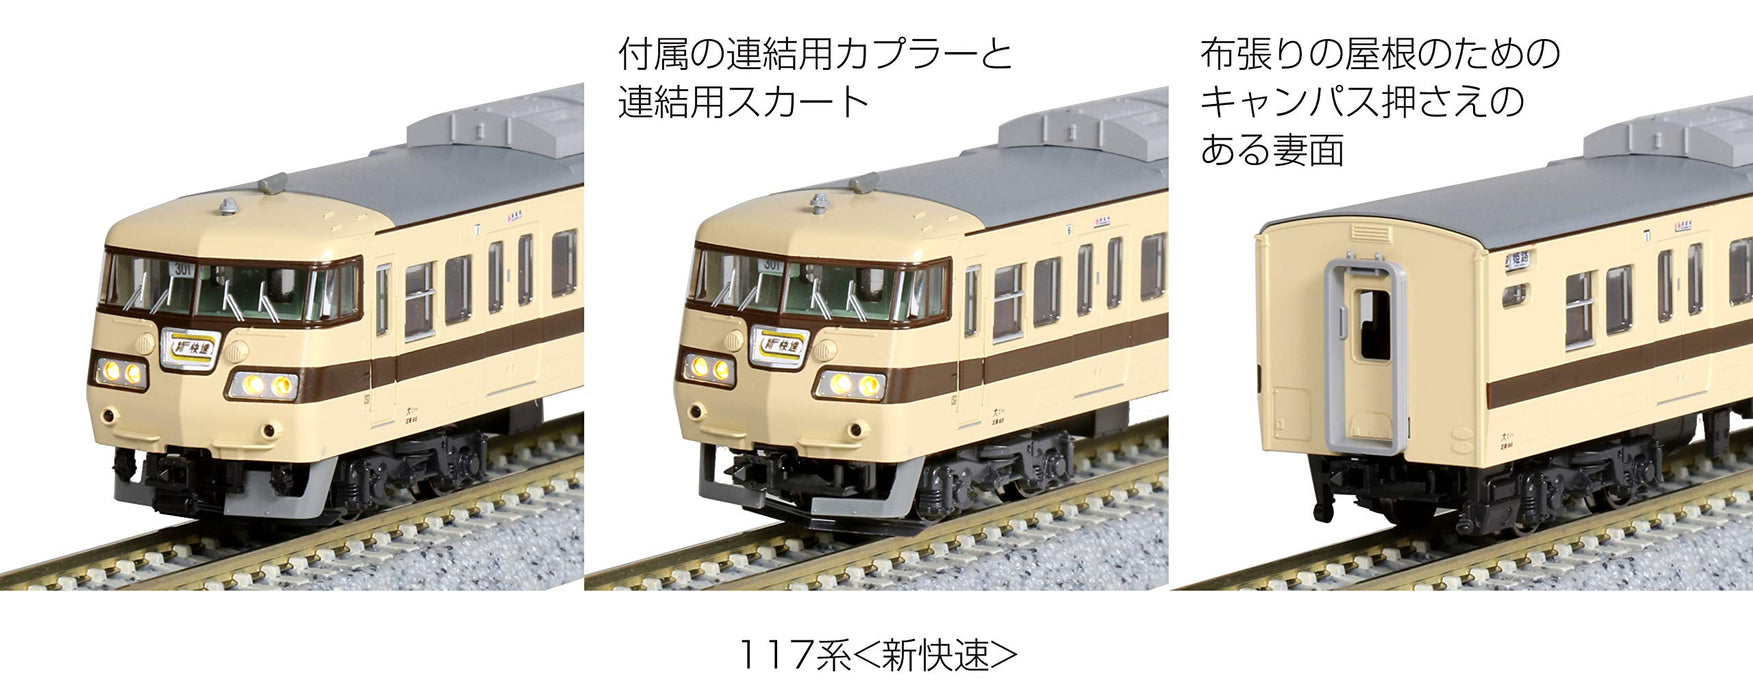 Kato N Gauge Railway Model Train - 117 Series New Rapid 6-Car Set 10-1607